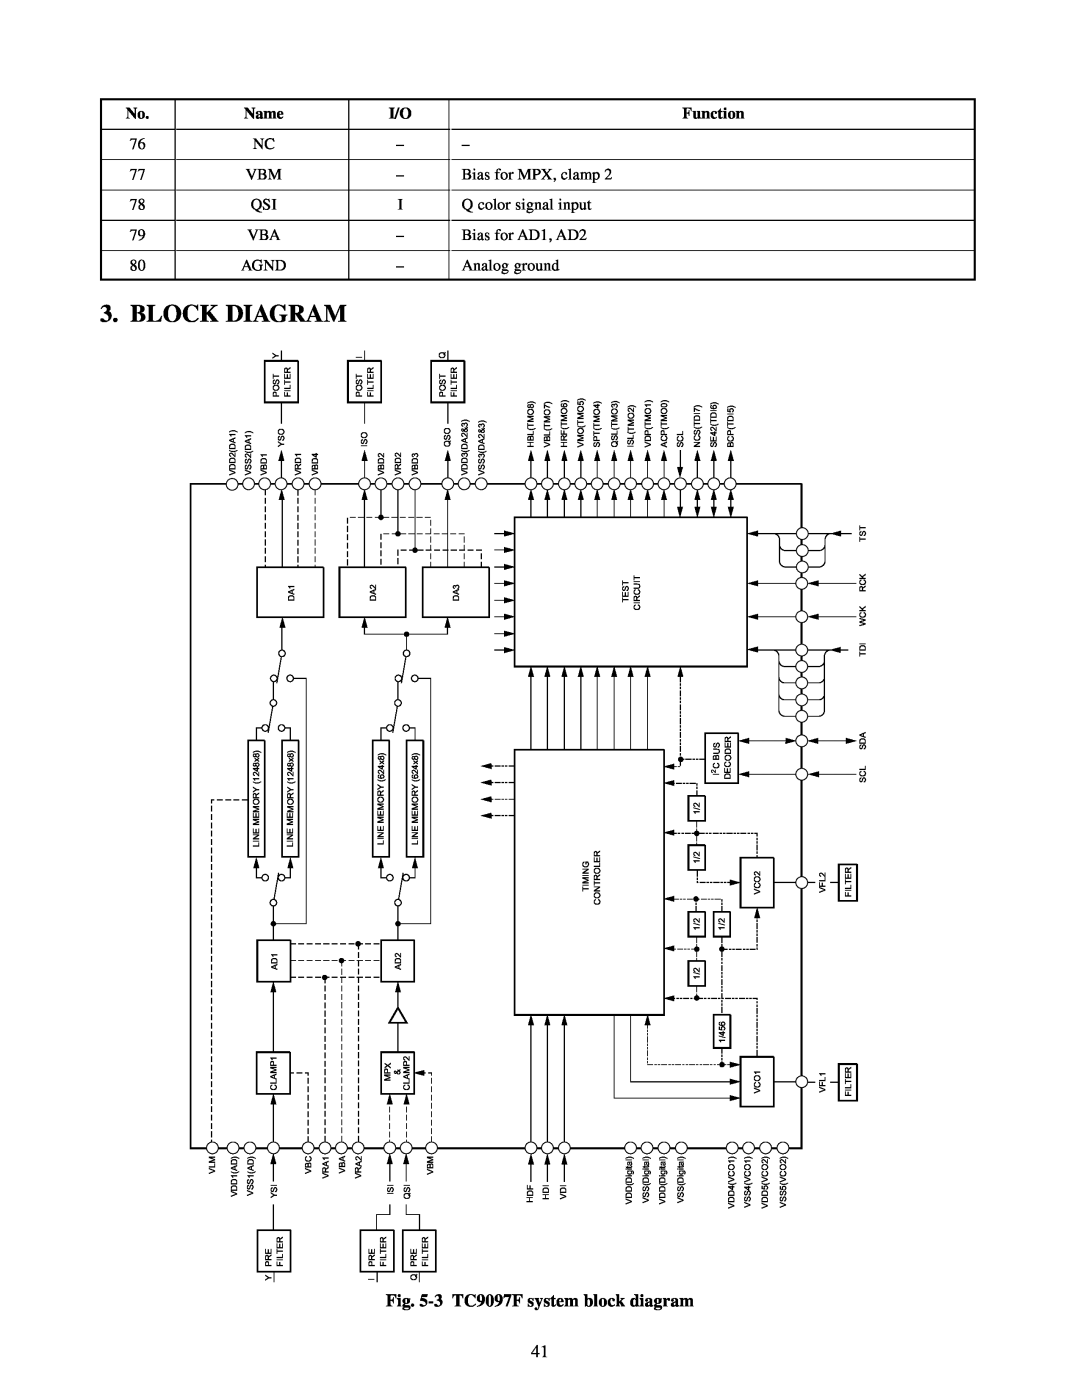 Toshiba TW40F80 manual Block Diagram, 3 TC9097F system block diagram, Name, Function, Agnd 